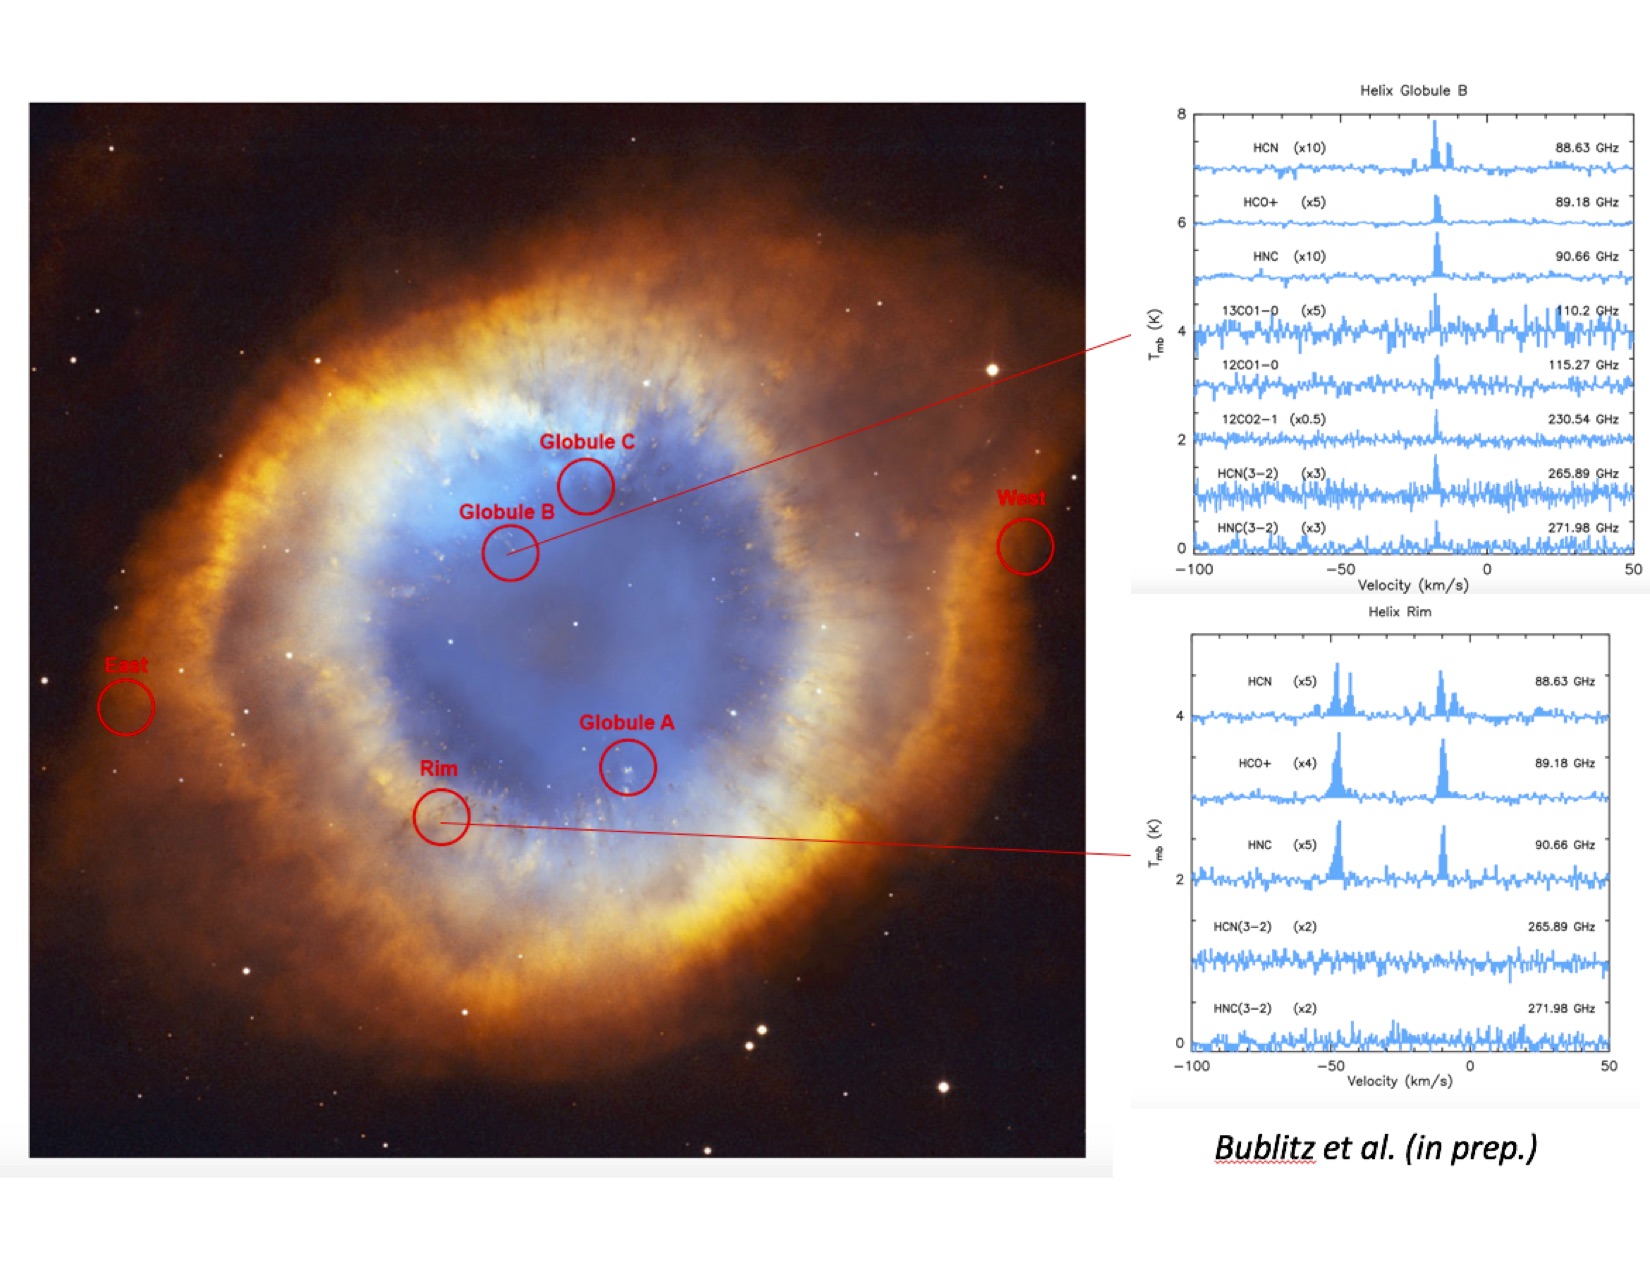 Hubble Space Telescope image of the Helix planetary nebula